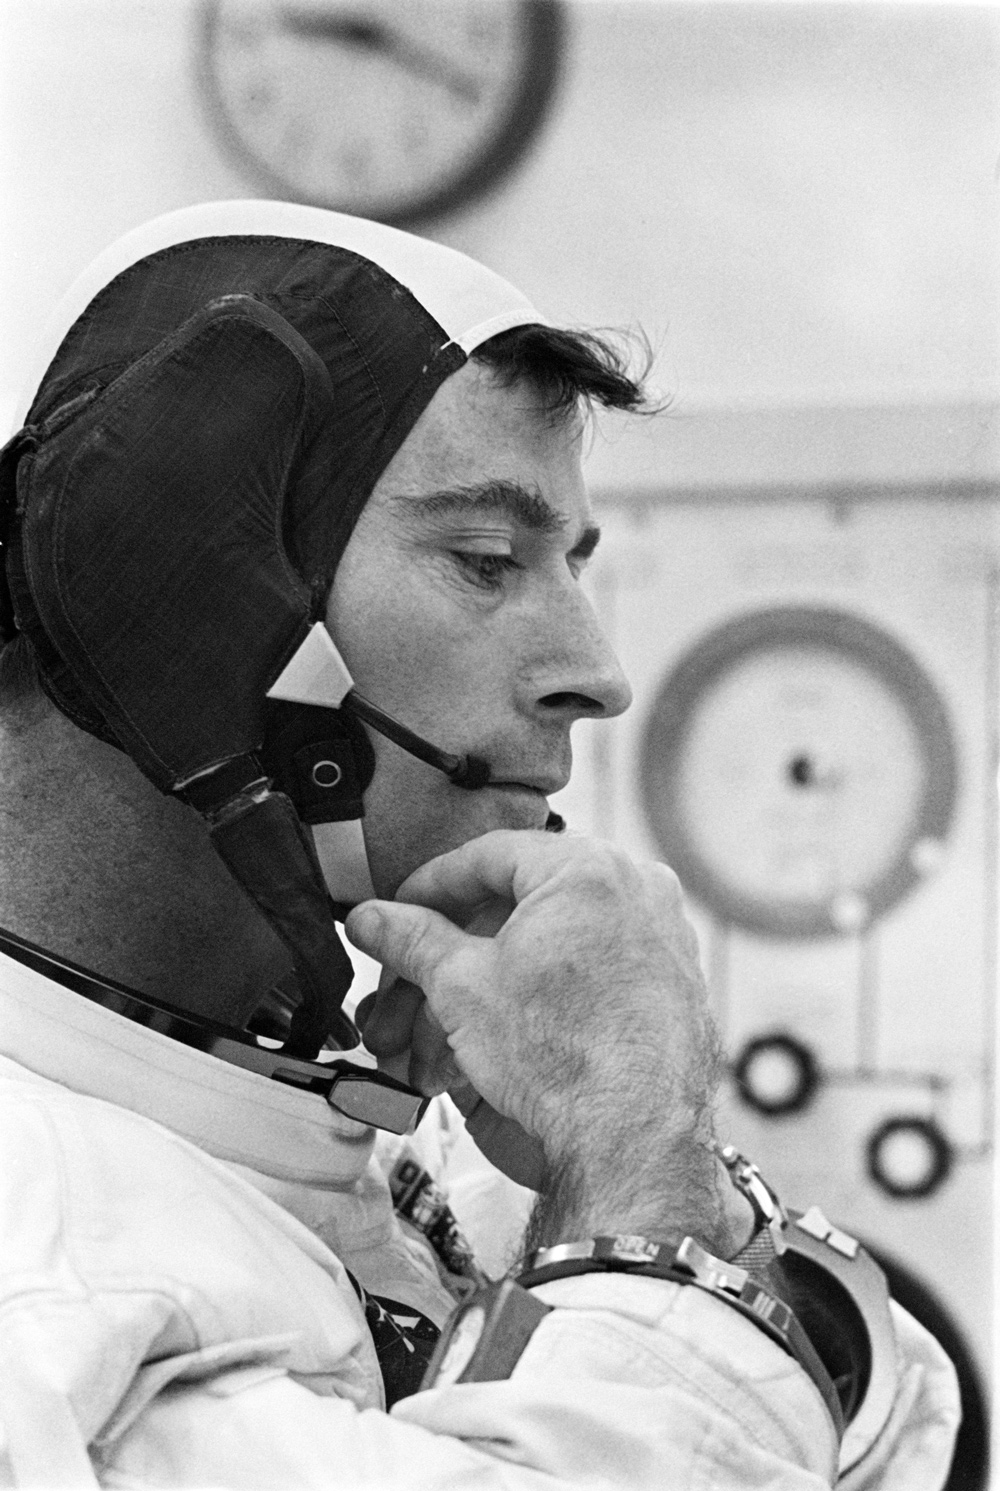 Astronaut adjusting chin strap on his cap